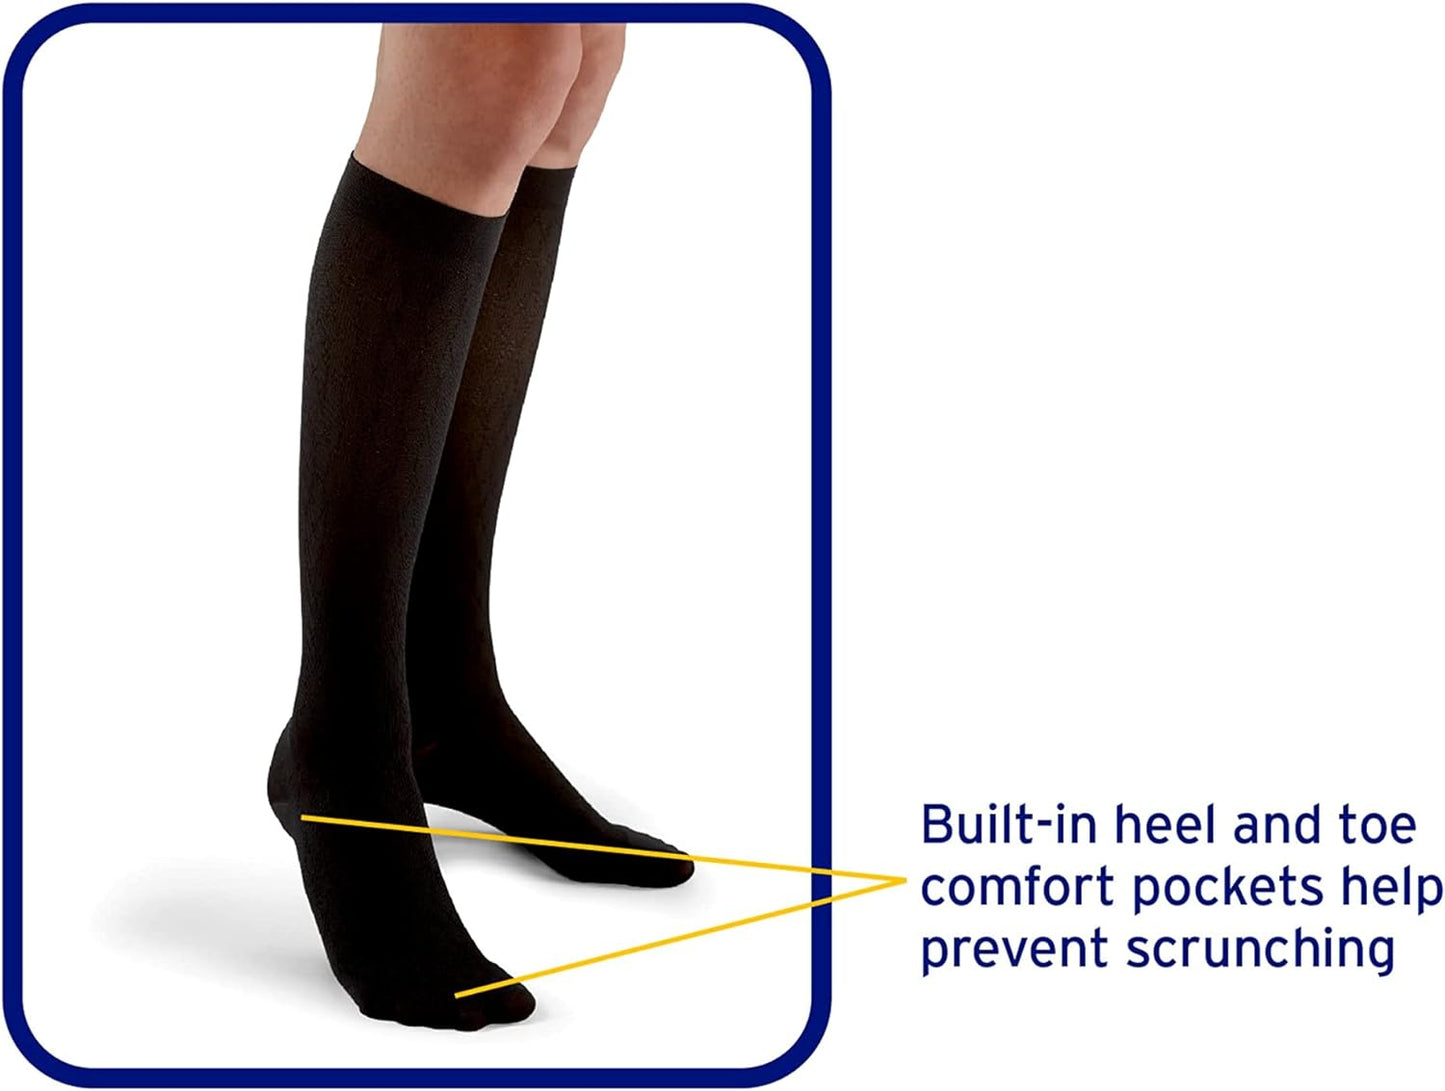 FUTURO Trouser Socks for Women Moderate (15-20 mm/Hg), Medium